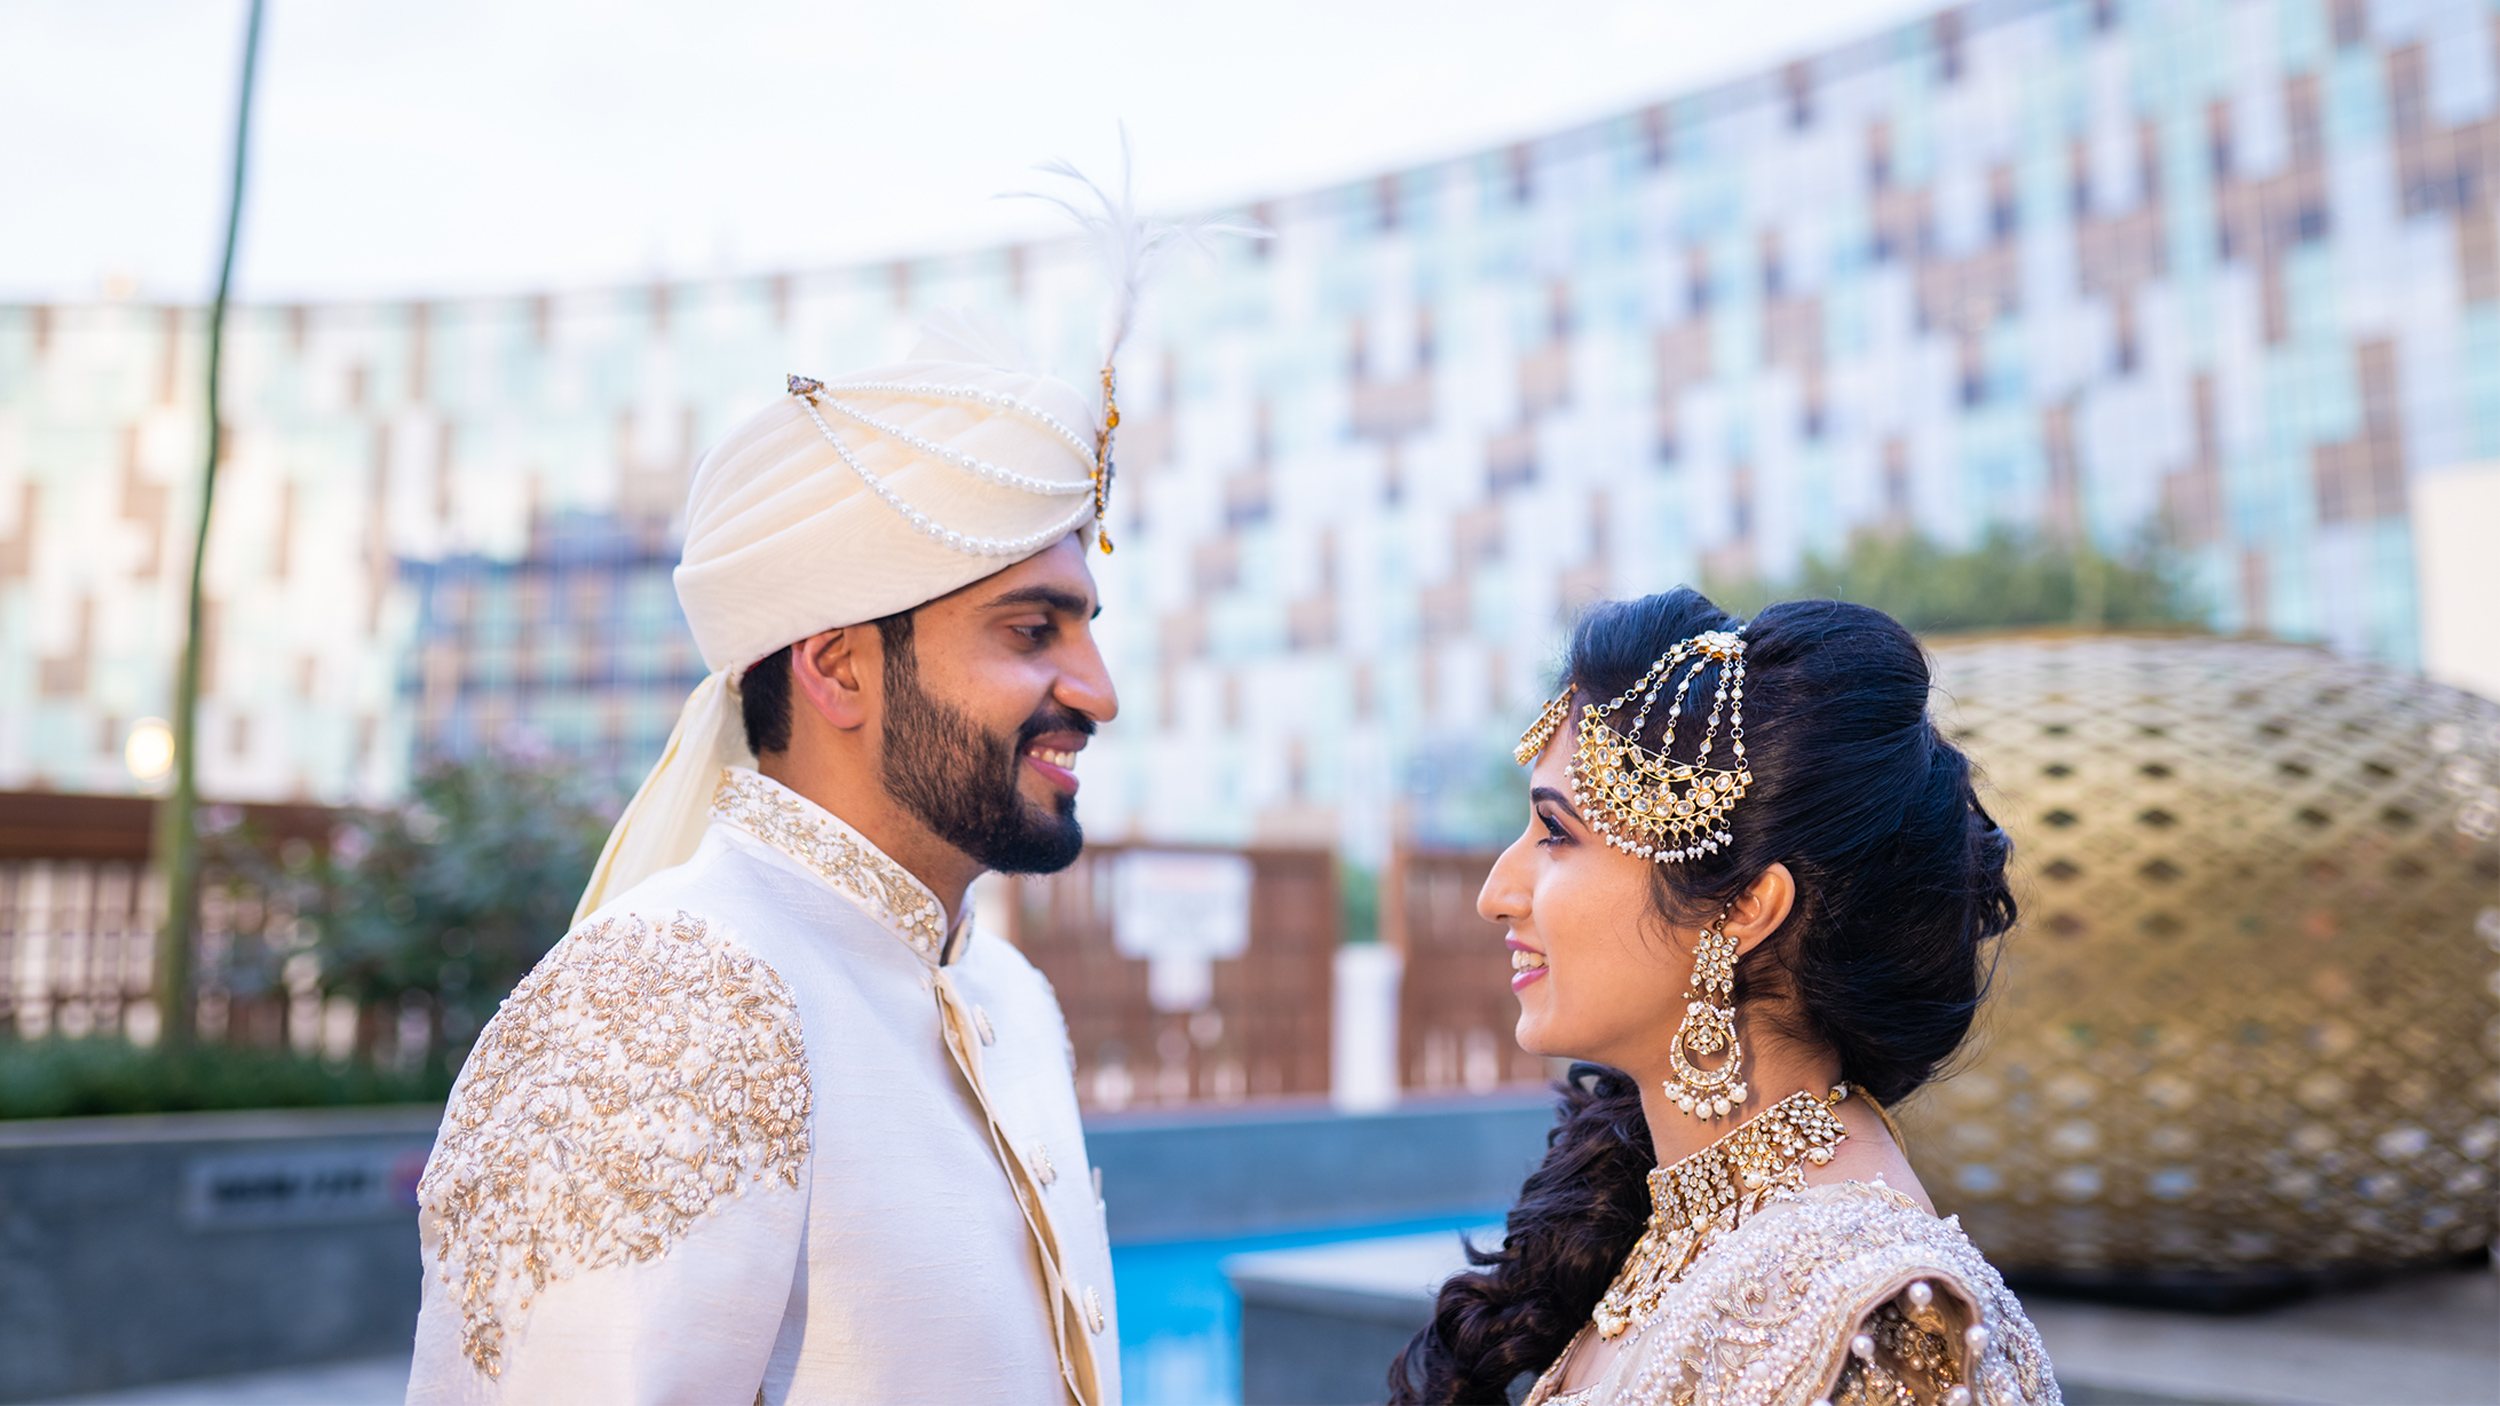 Zohra + Daanish's Muslim Wedding Highlights